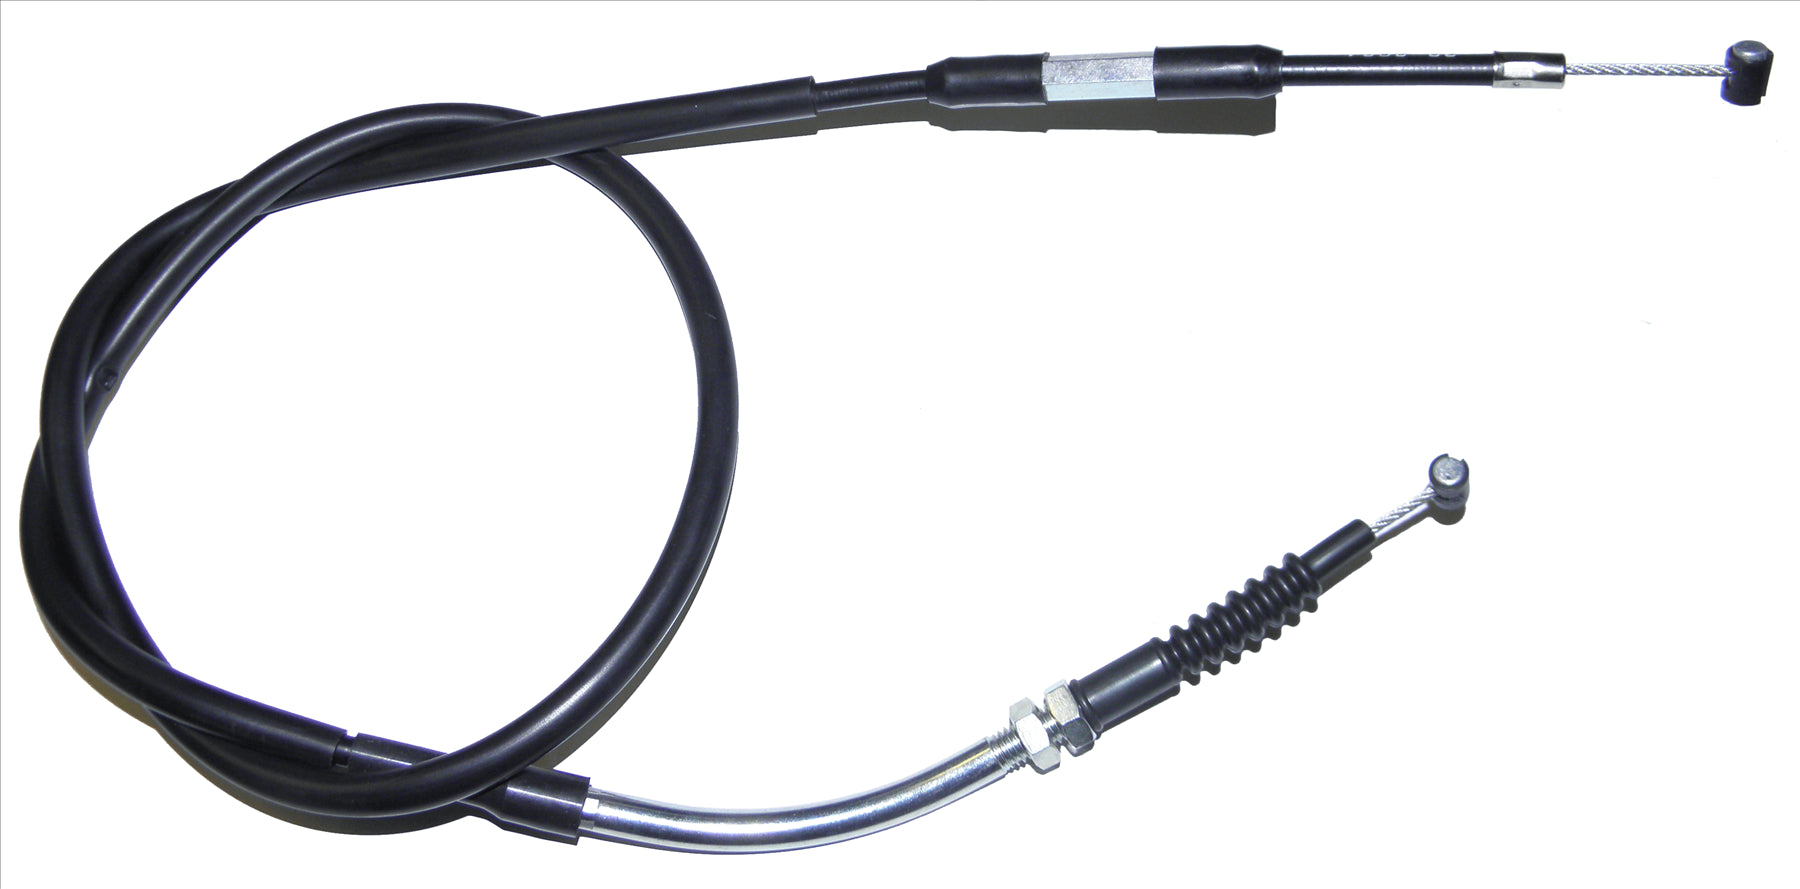 Apico Black Clutch Cable For Kawasaki KX 450F KXF 450 2006-2008